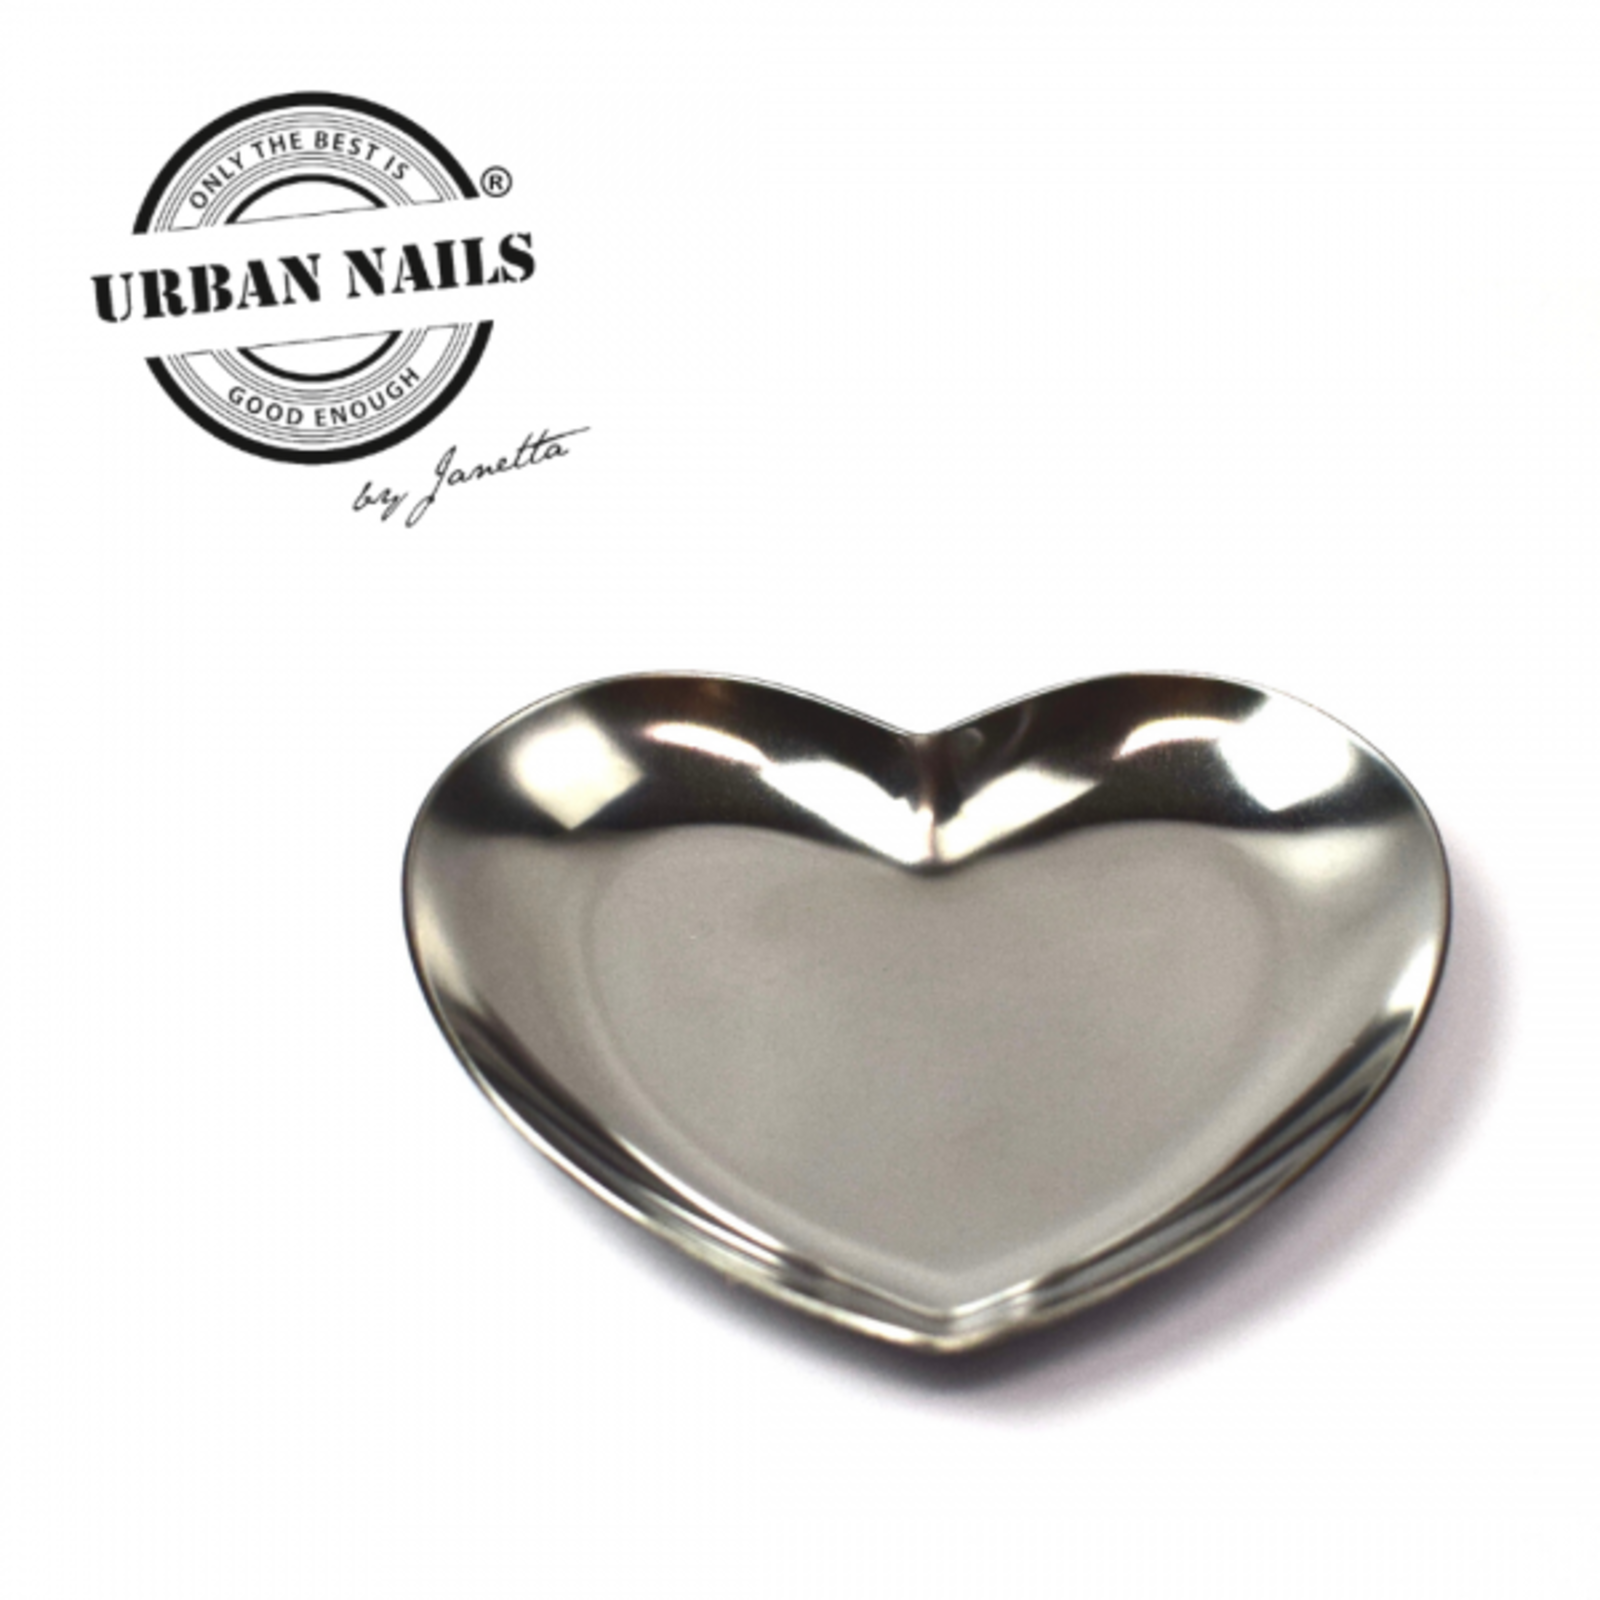 Urban nails Rhinestone heart silver